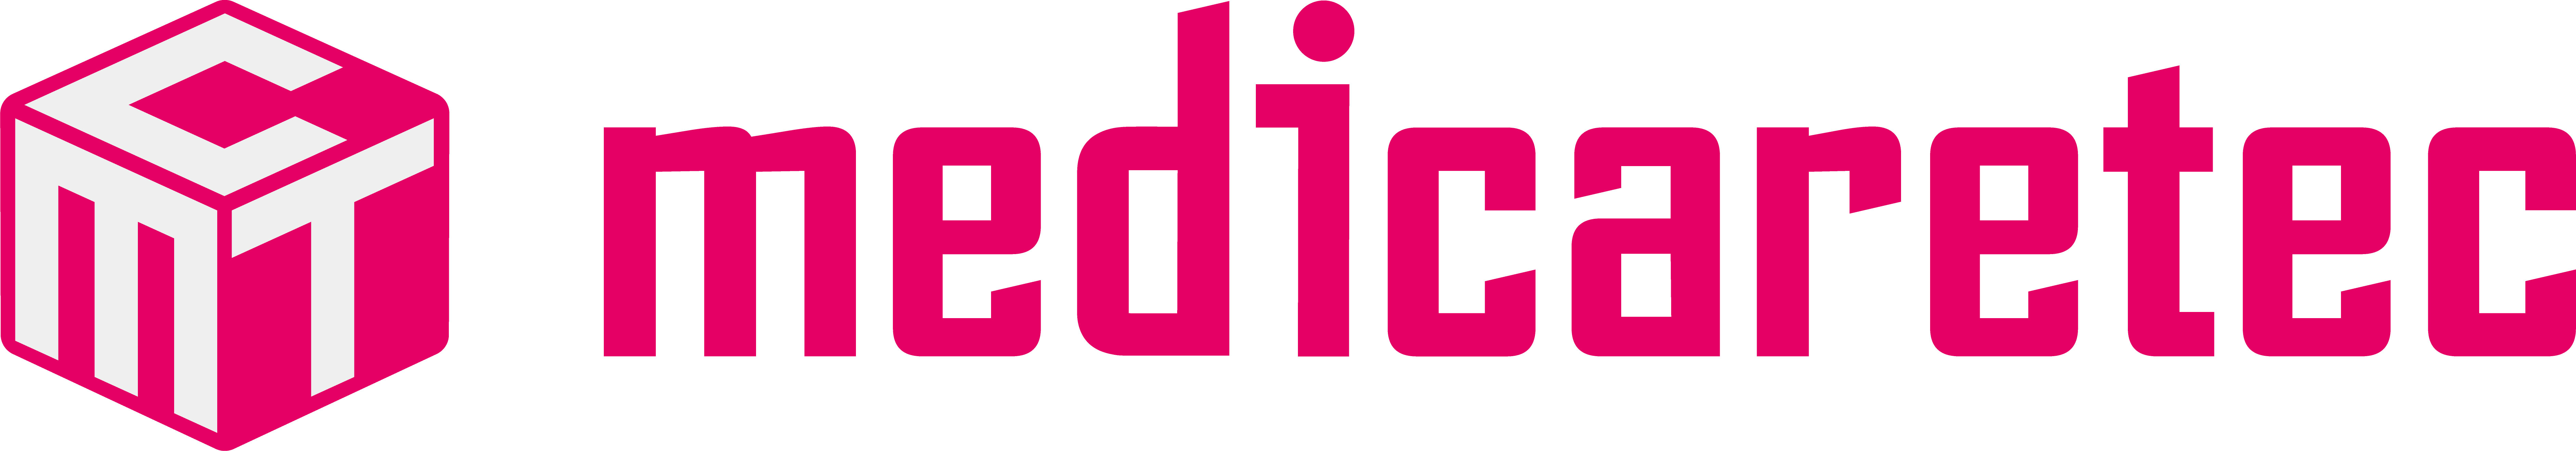 Medicaretec Co., Ltd. Logo